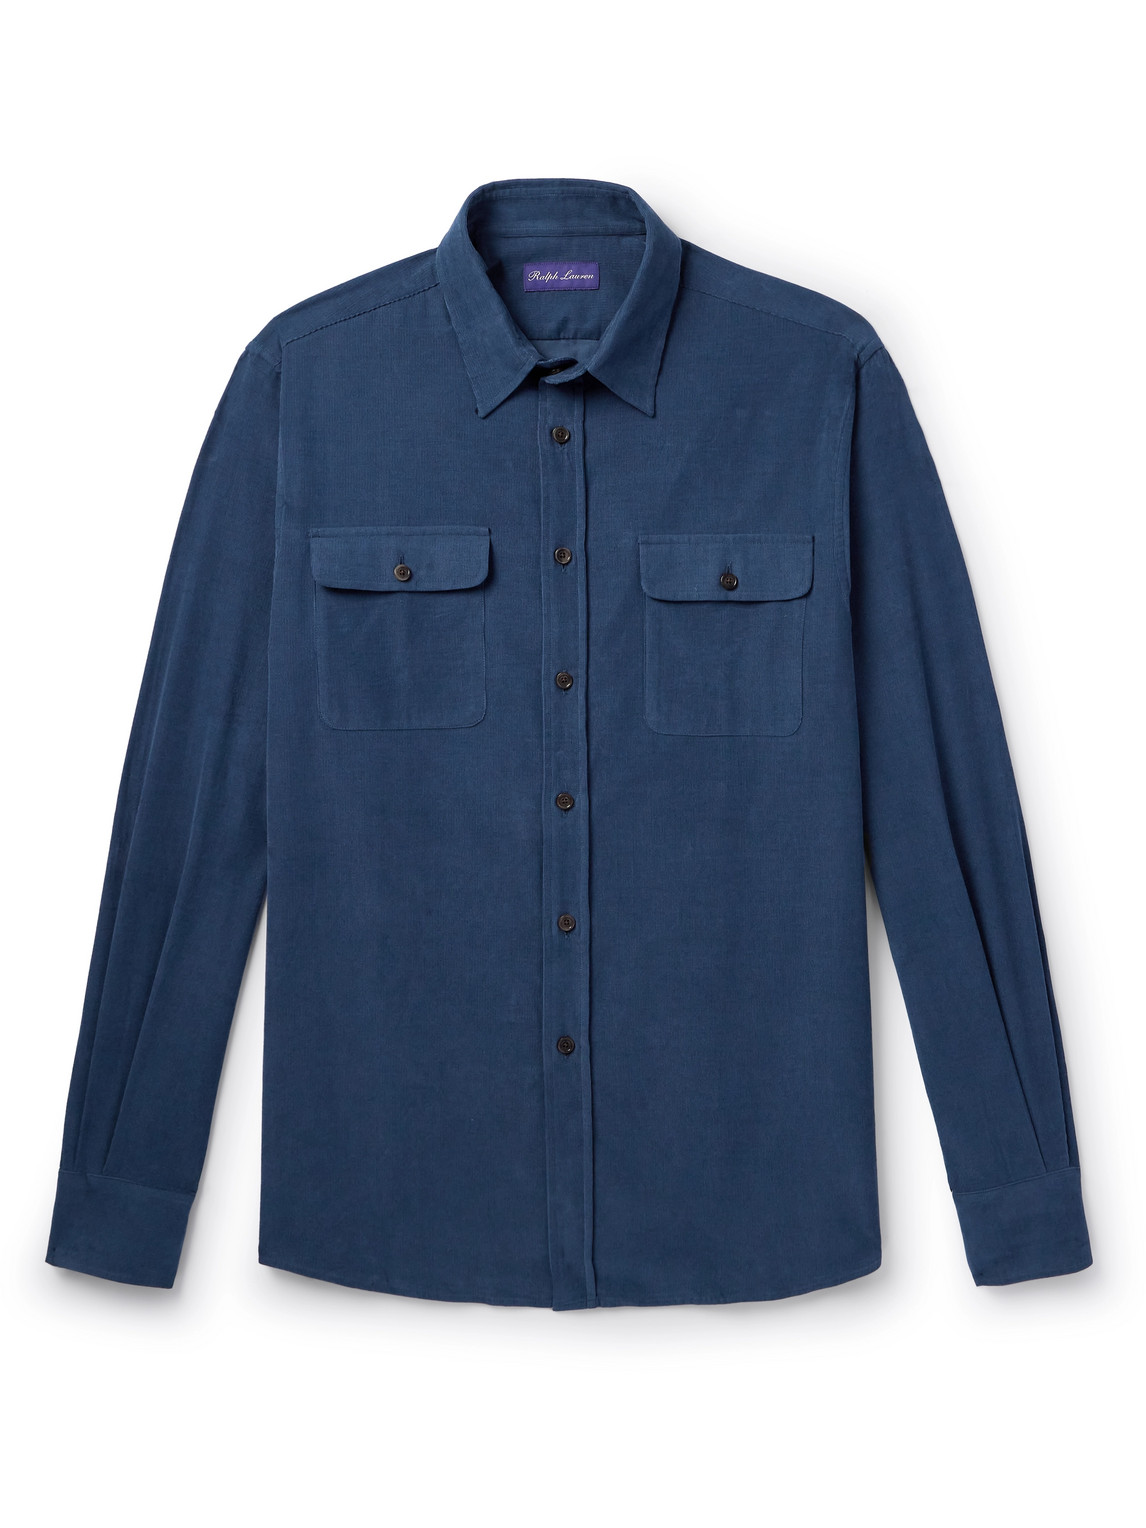 Ralph Lauren Purple Label - Cotton-Corduroy Shirt - Men - Blue - L von Ralph Lauren Purple Label